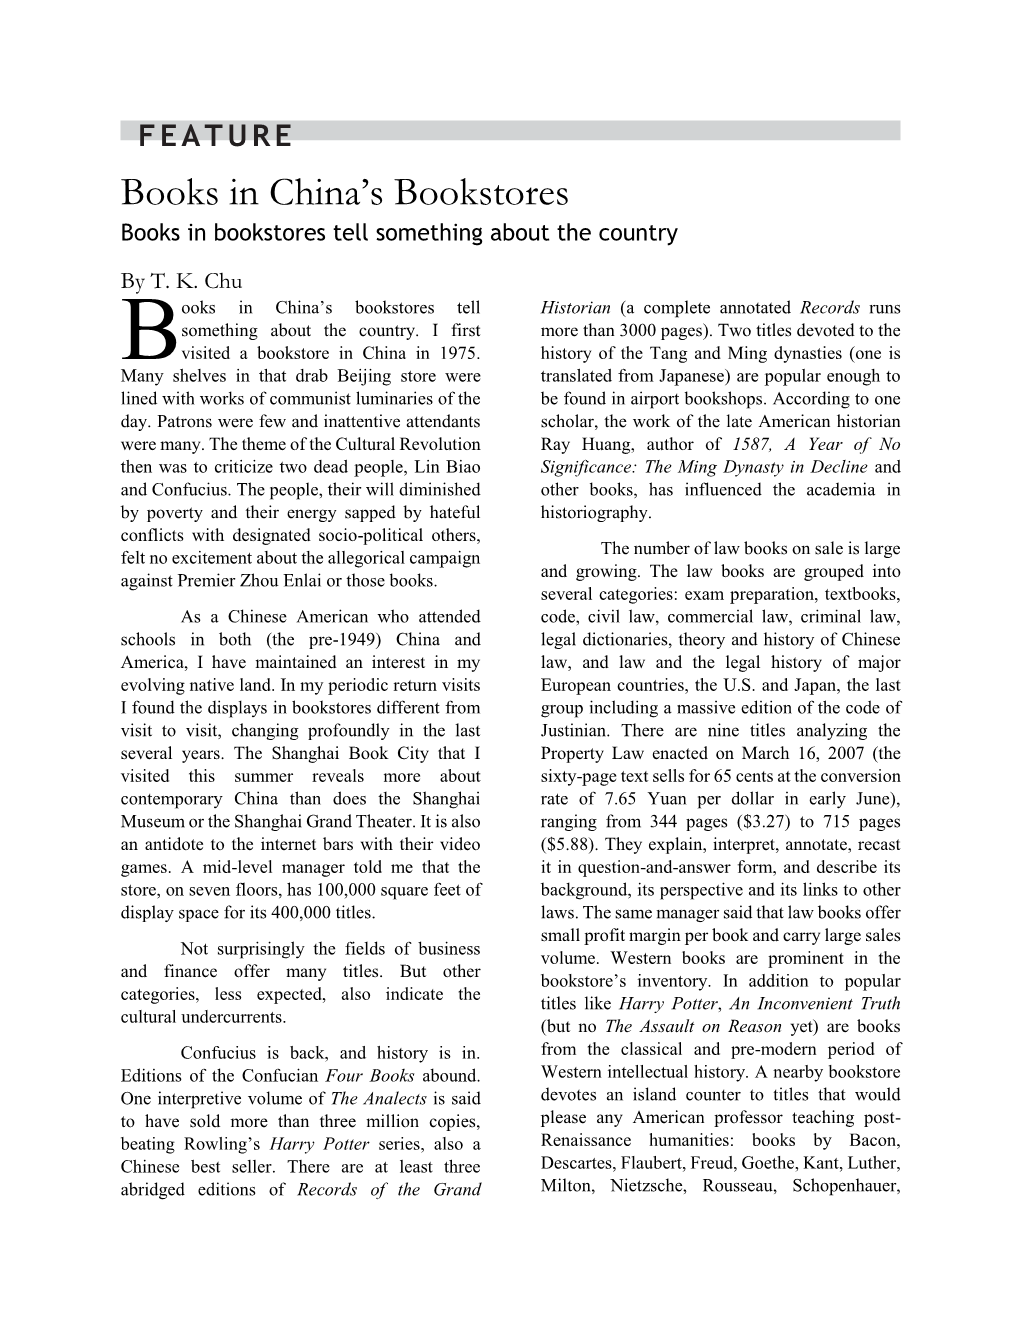 Books in China's Bookstores